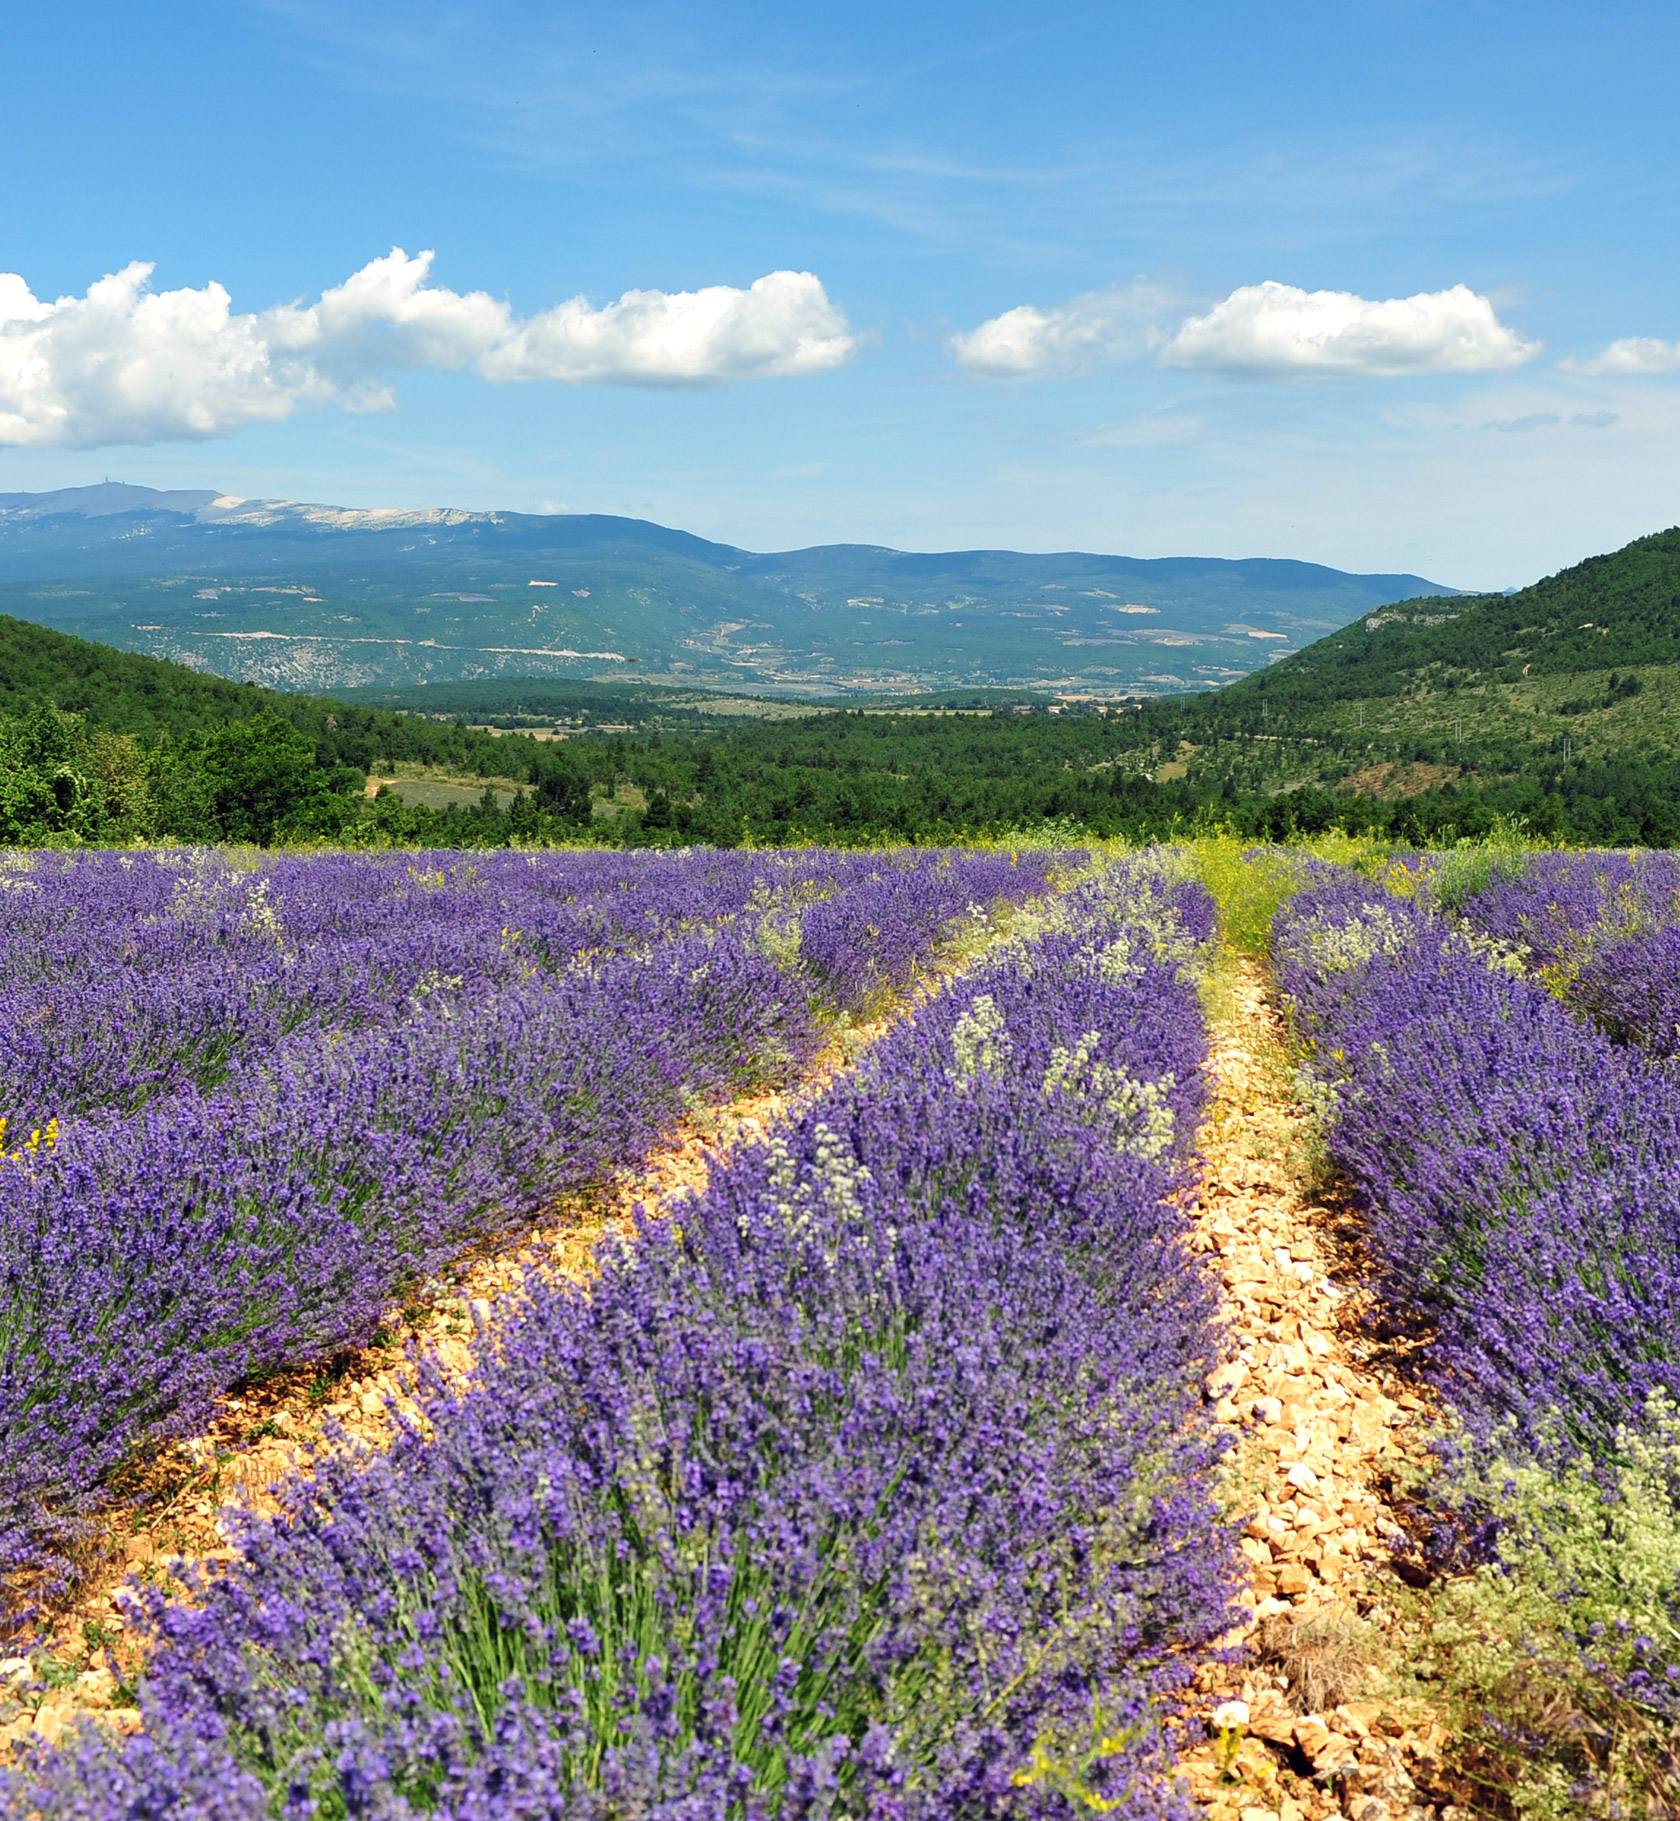 Apiculteurs de Provence